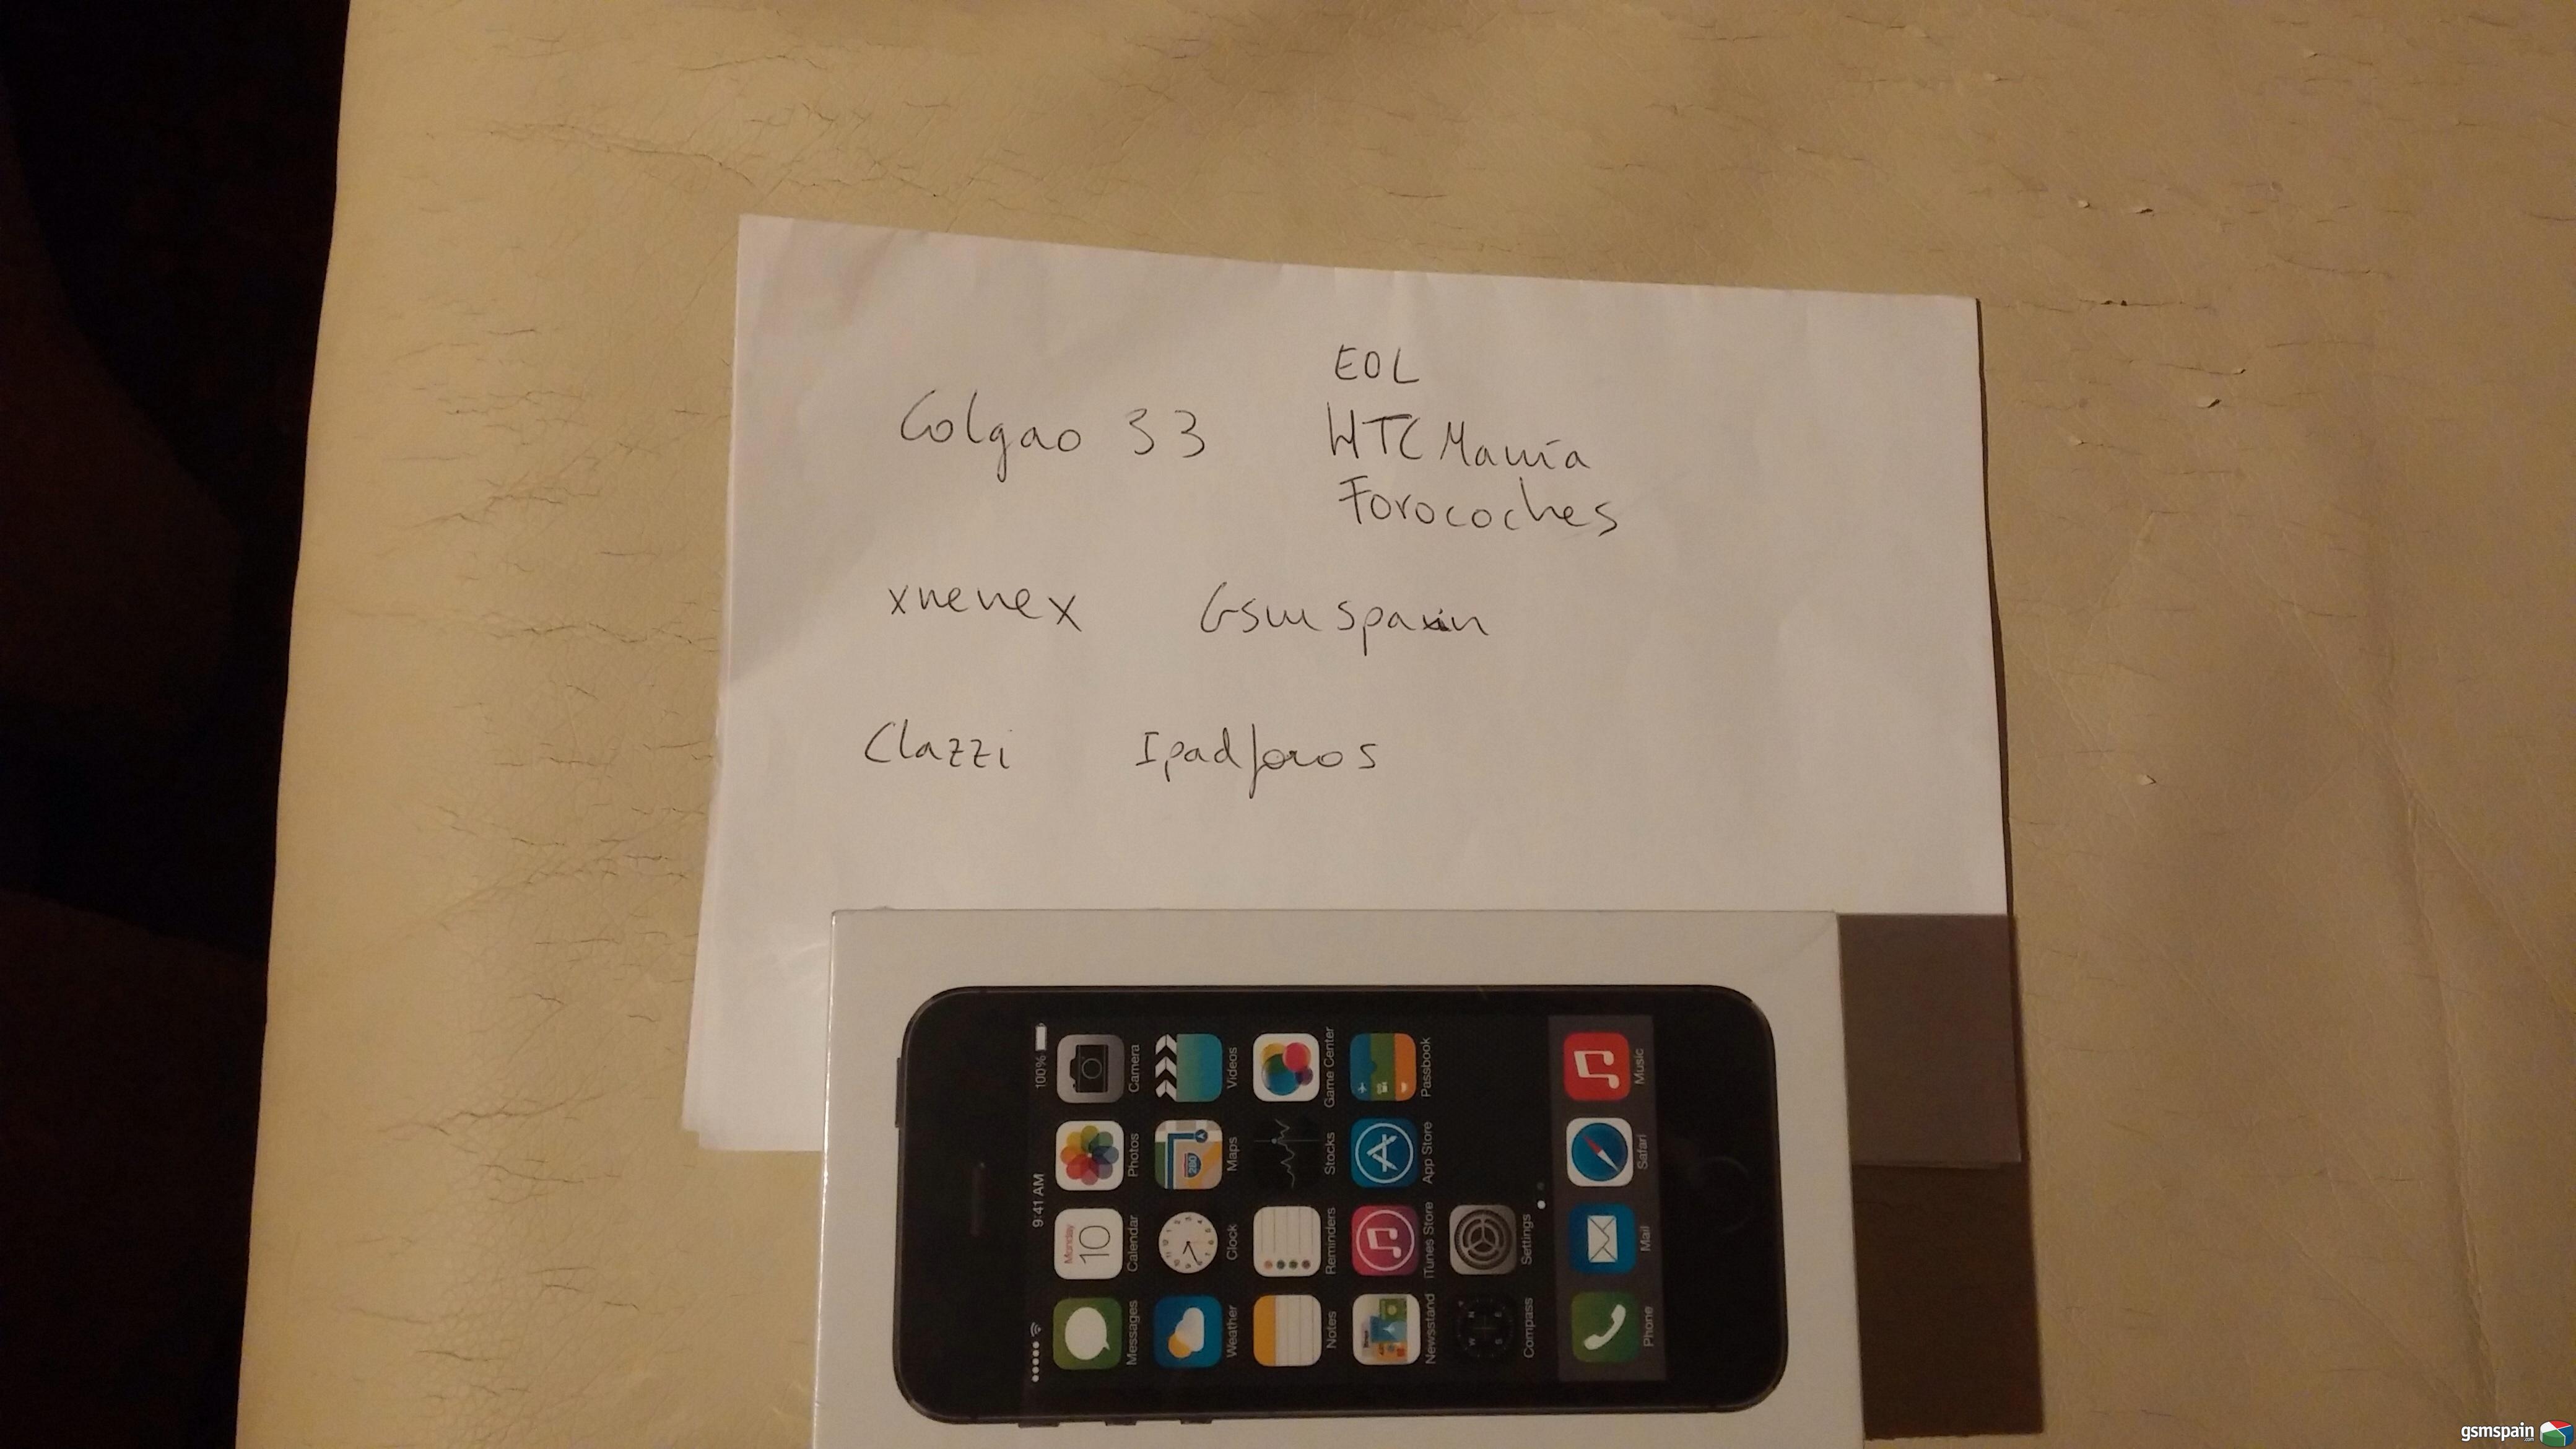 [CAMBIO] Iphone 5s gris precintado movistar por...